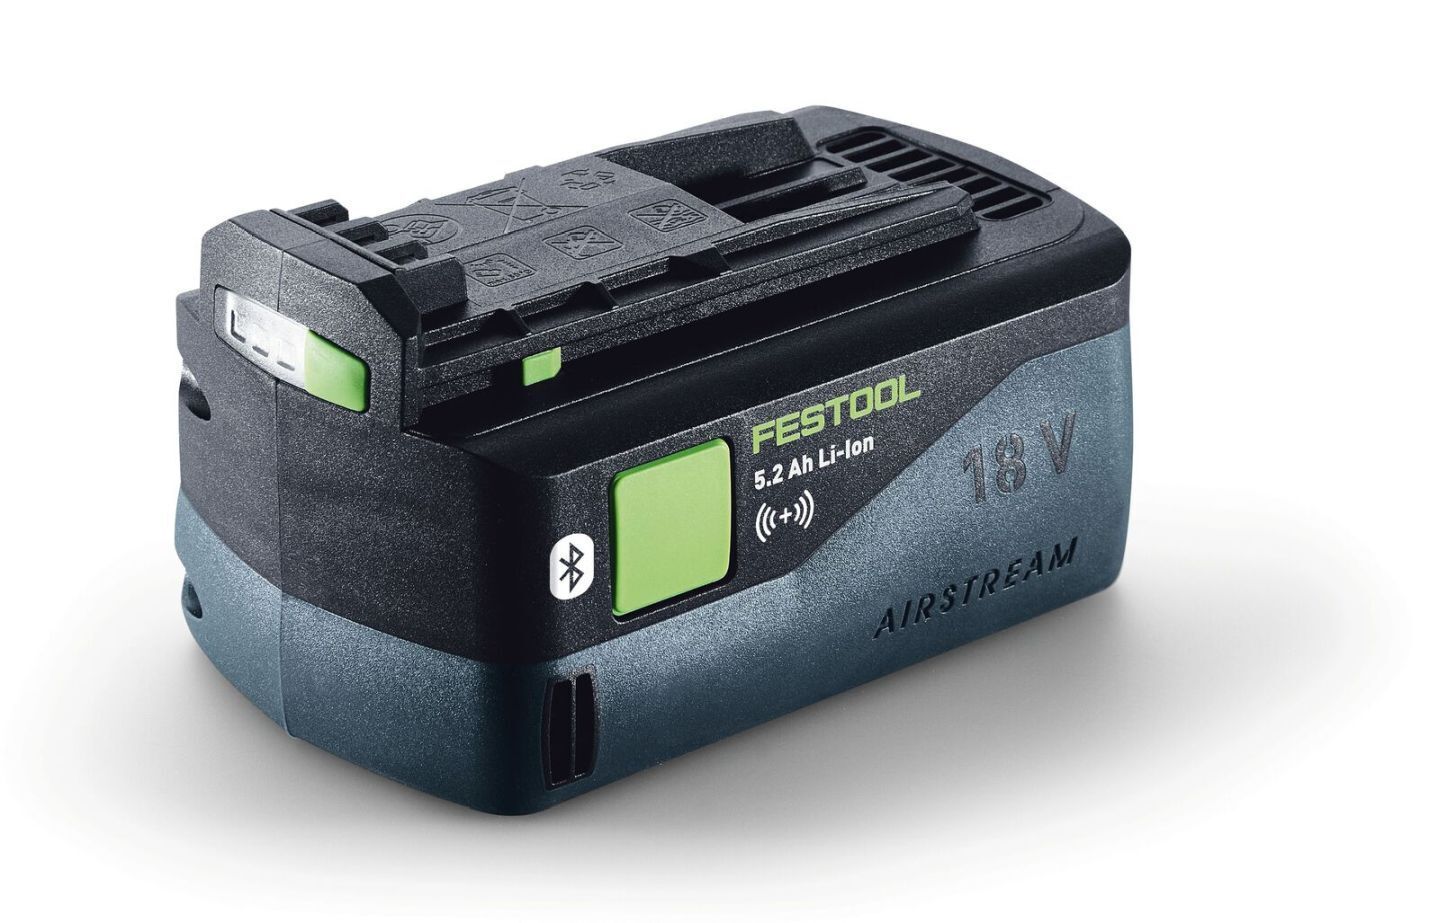 Festool 18V Li-ion 5.2 Ah Bluetooth Airstream Battery Pack (202479)